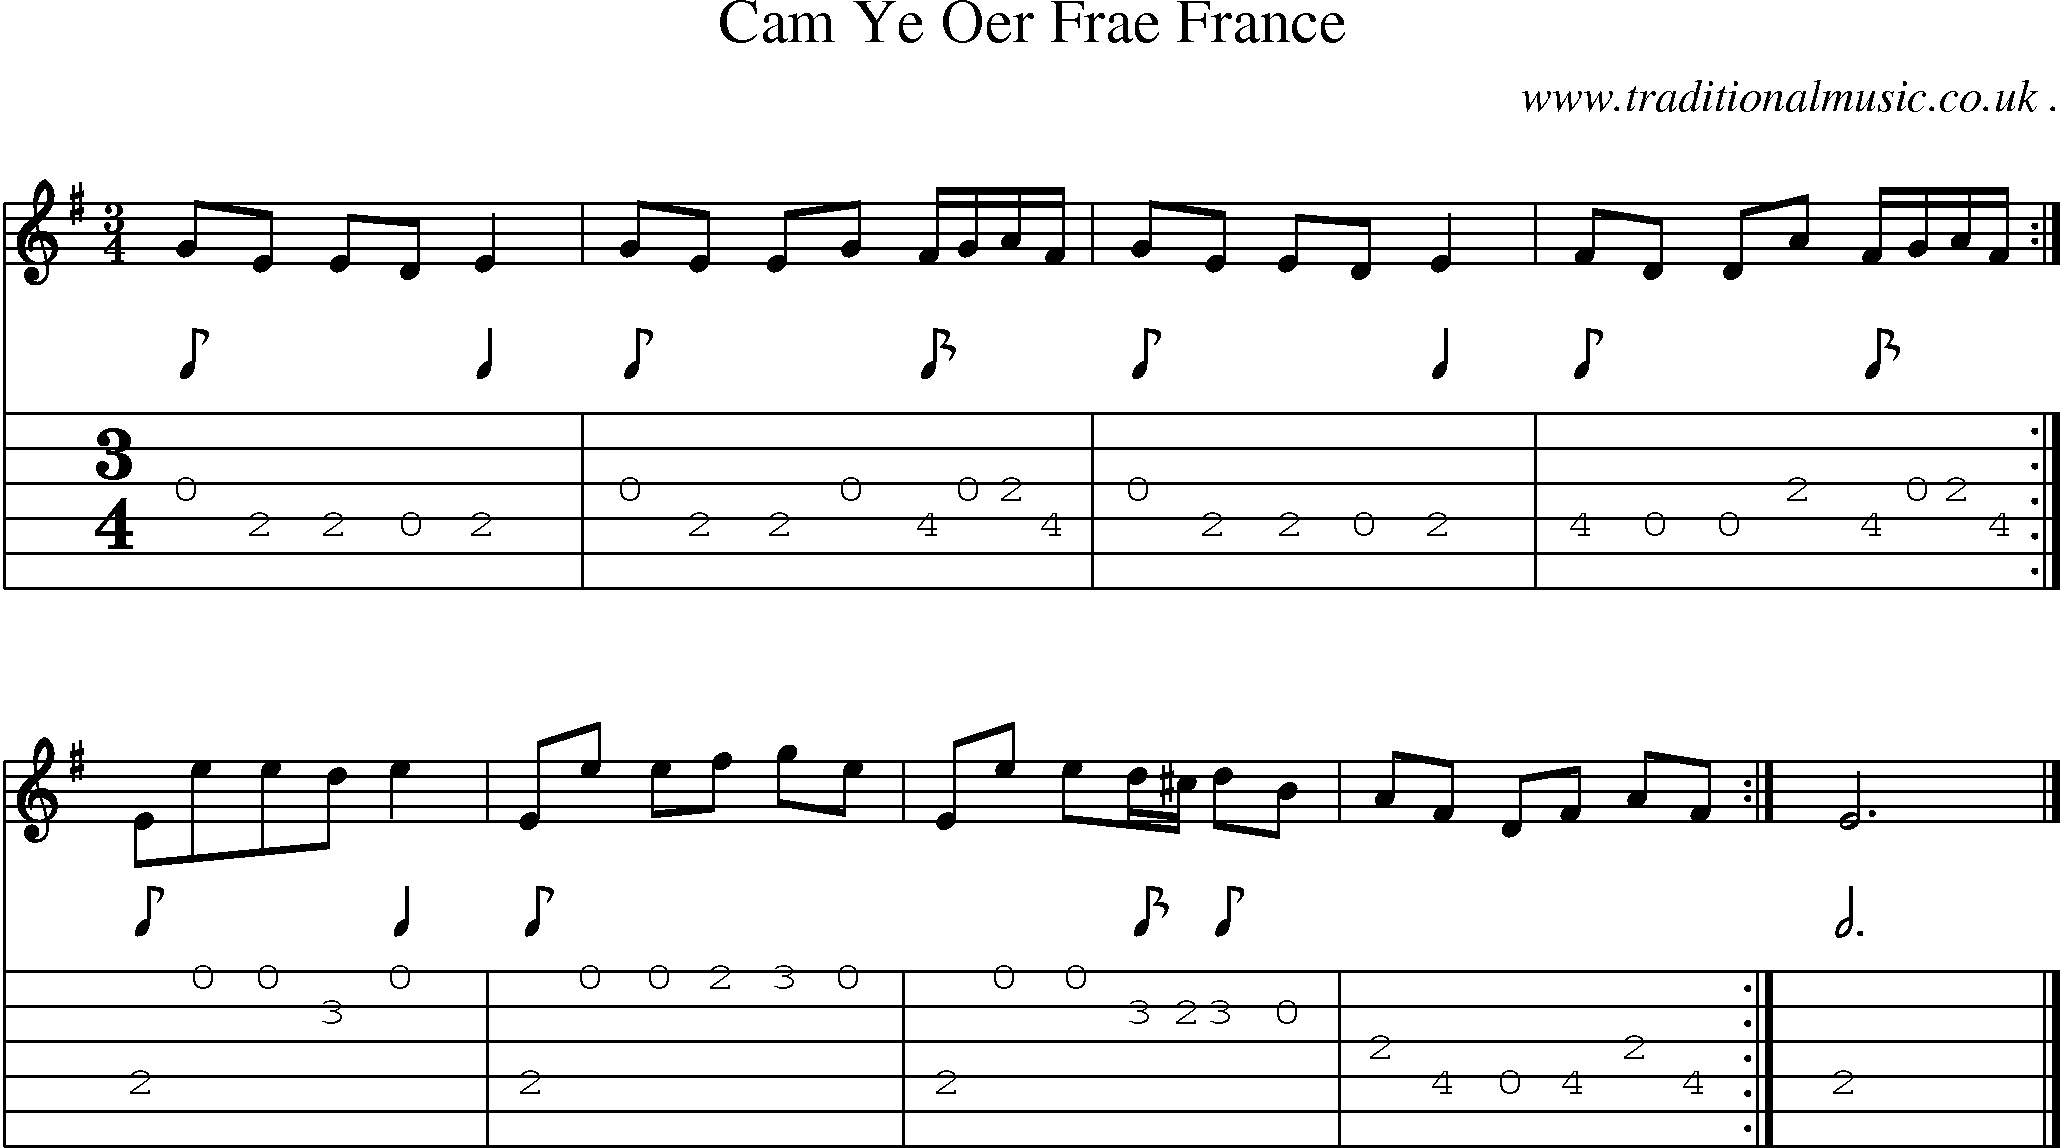 Sheet-music  score, Chords and Guitar Tabs for Cam Ye Oer Frae France